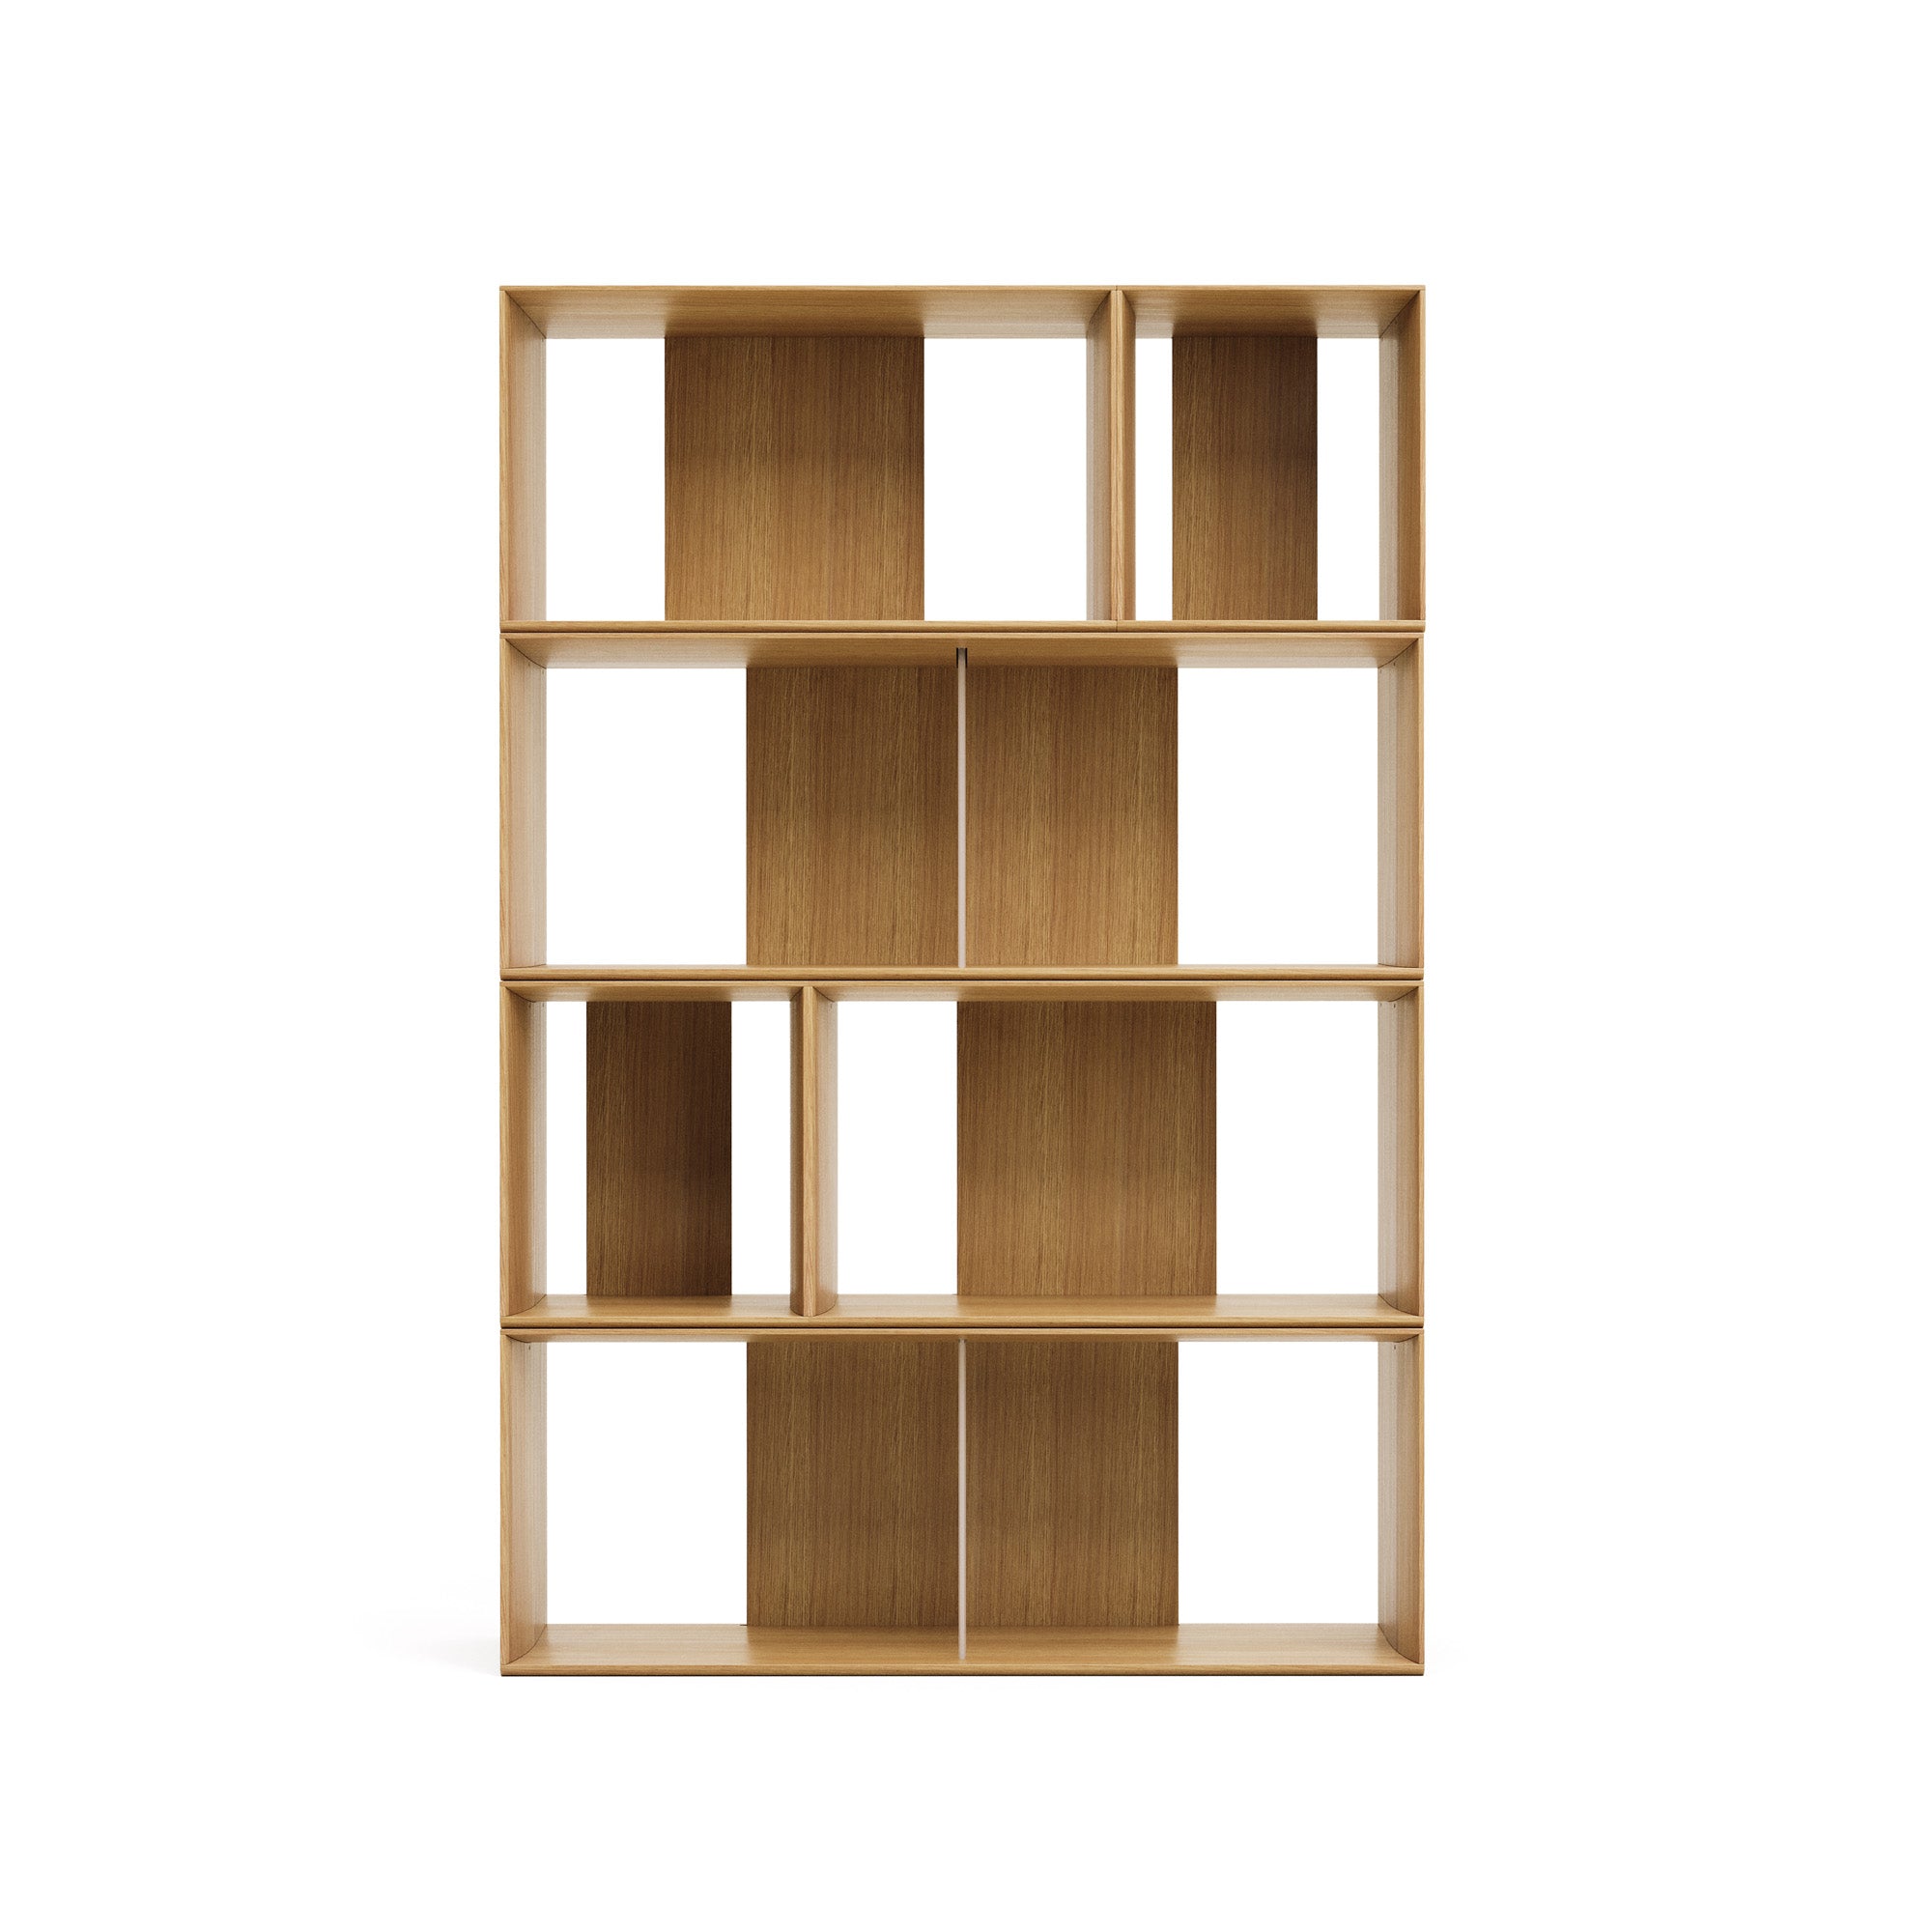 Litto set of 6 modular shelving units in oak wood veneer, 101 x 152 cm